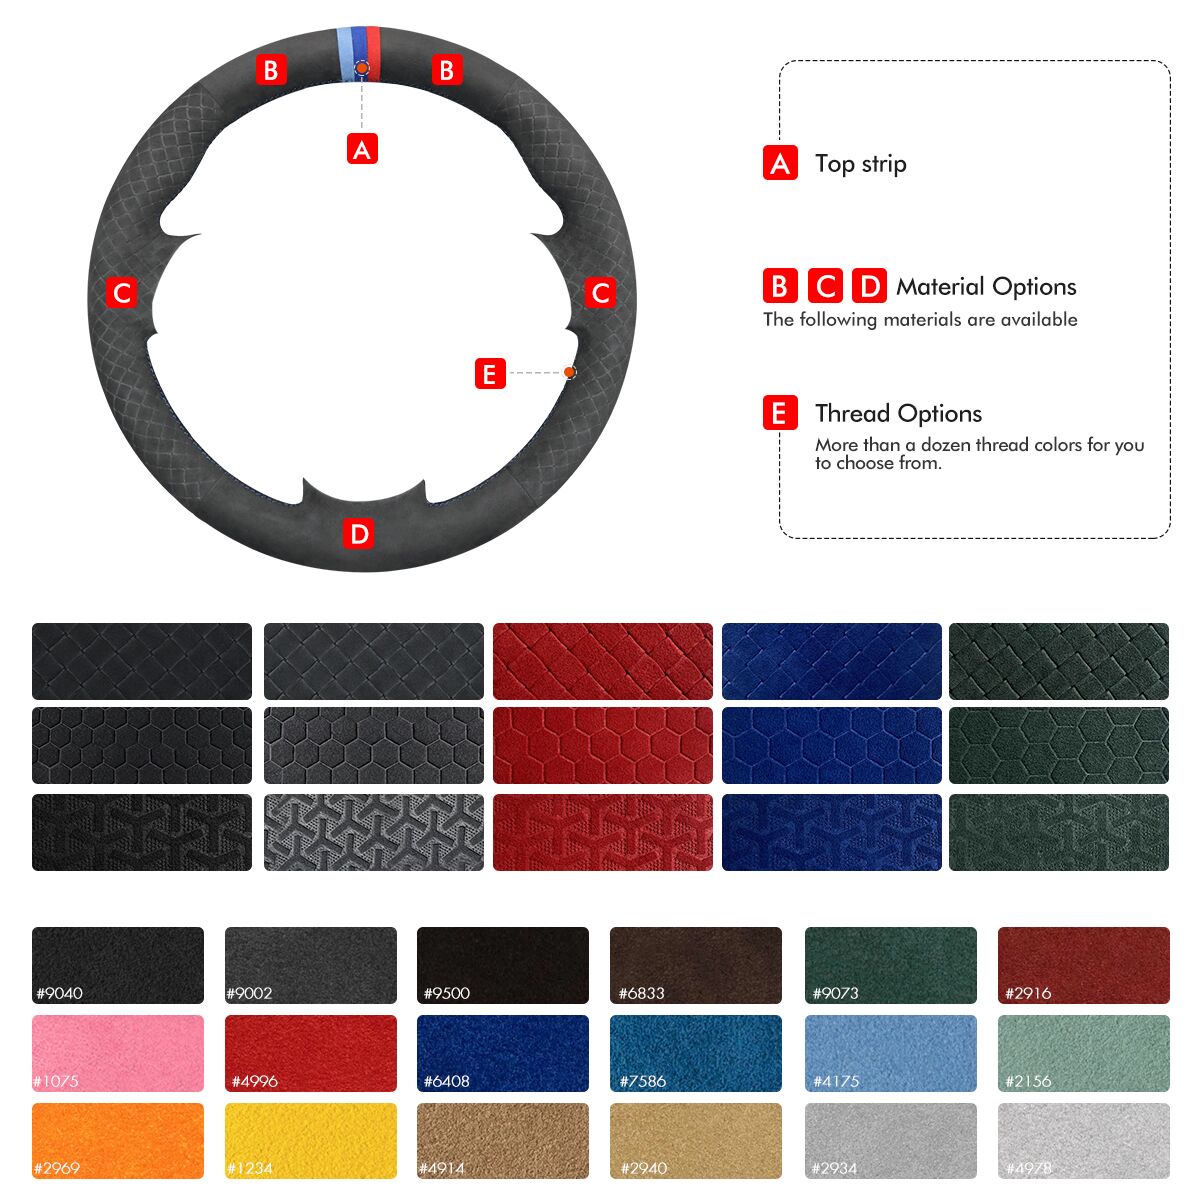 MEWANT Black Alcantara Car Steering Wheel Cover for BMW G20 F44 G22 G2 –  Mewant steering wheel cover